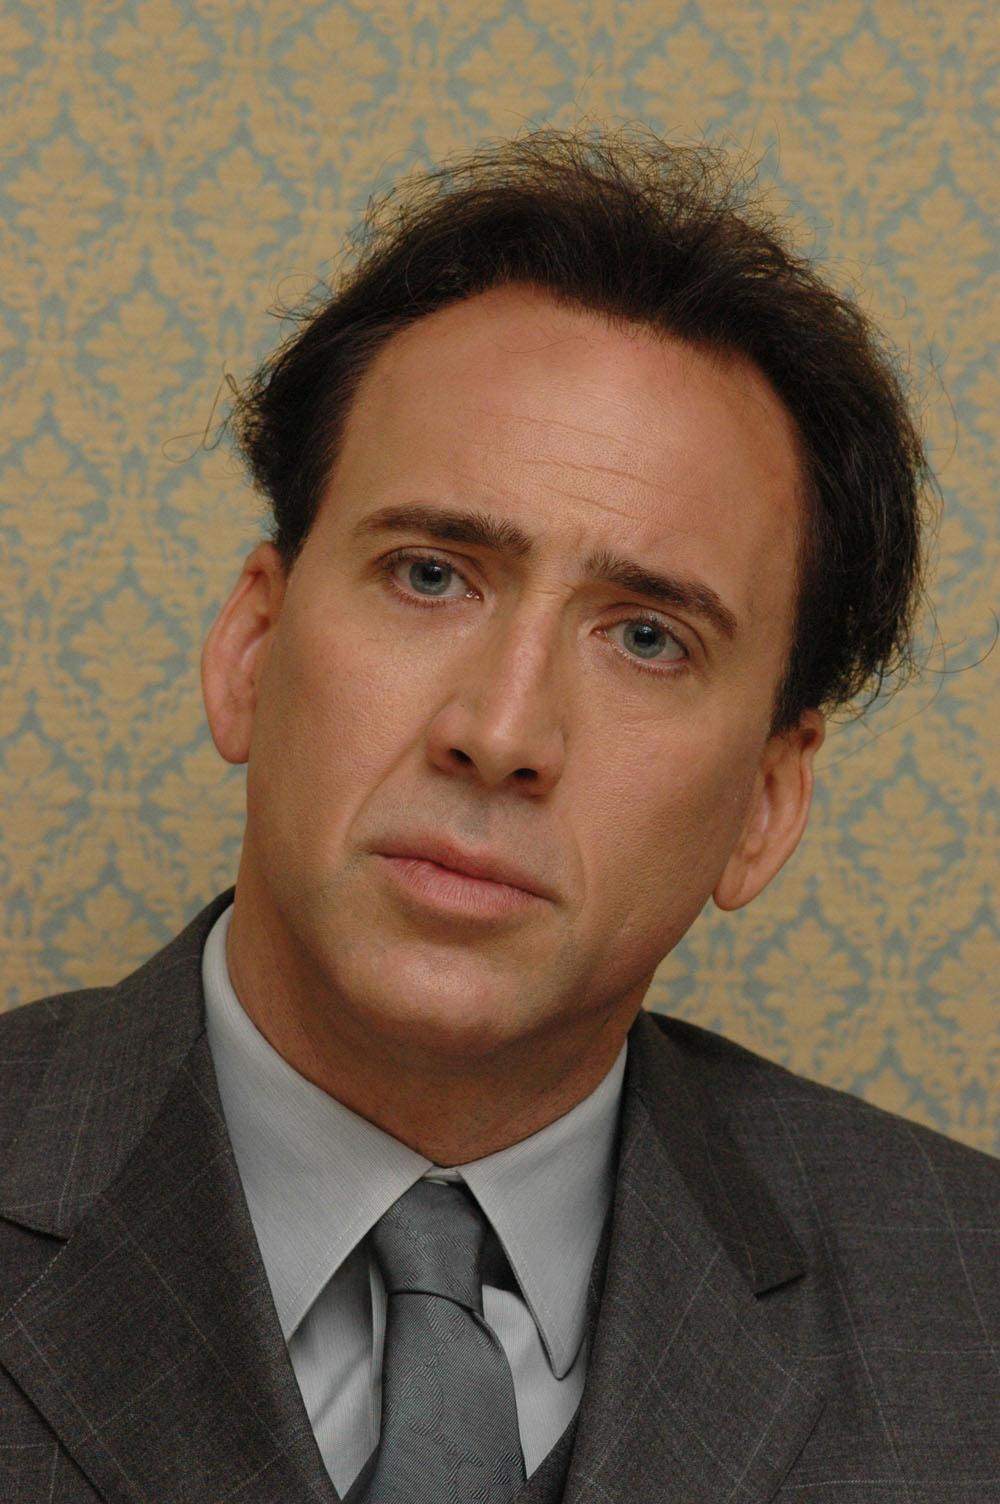 Photo №1504 Nicolas Cage.